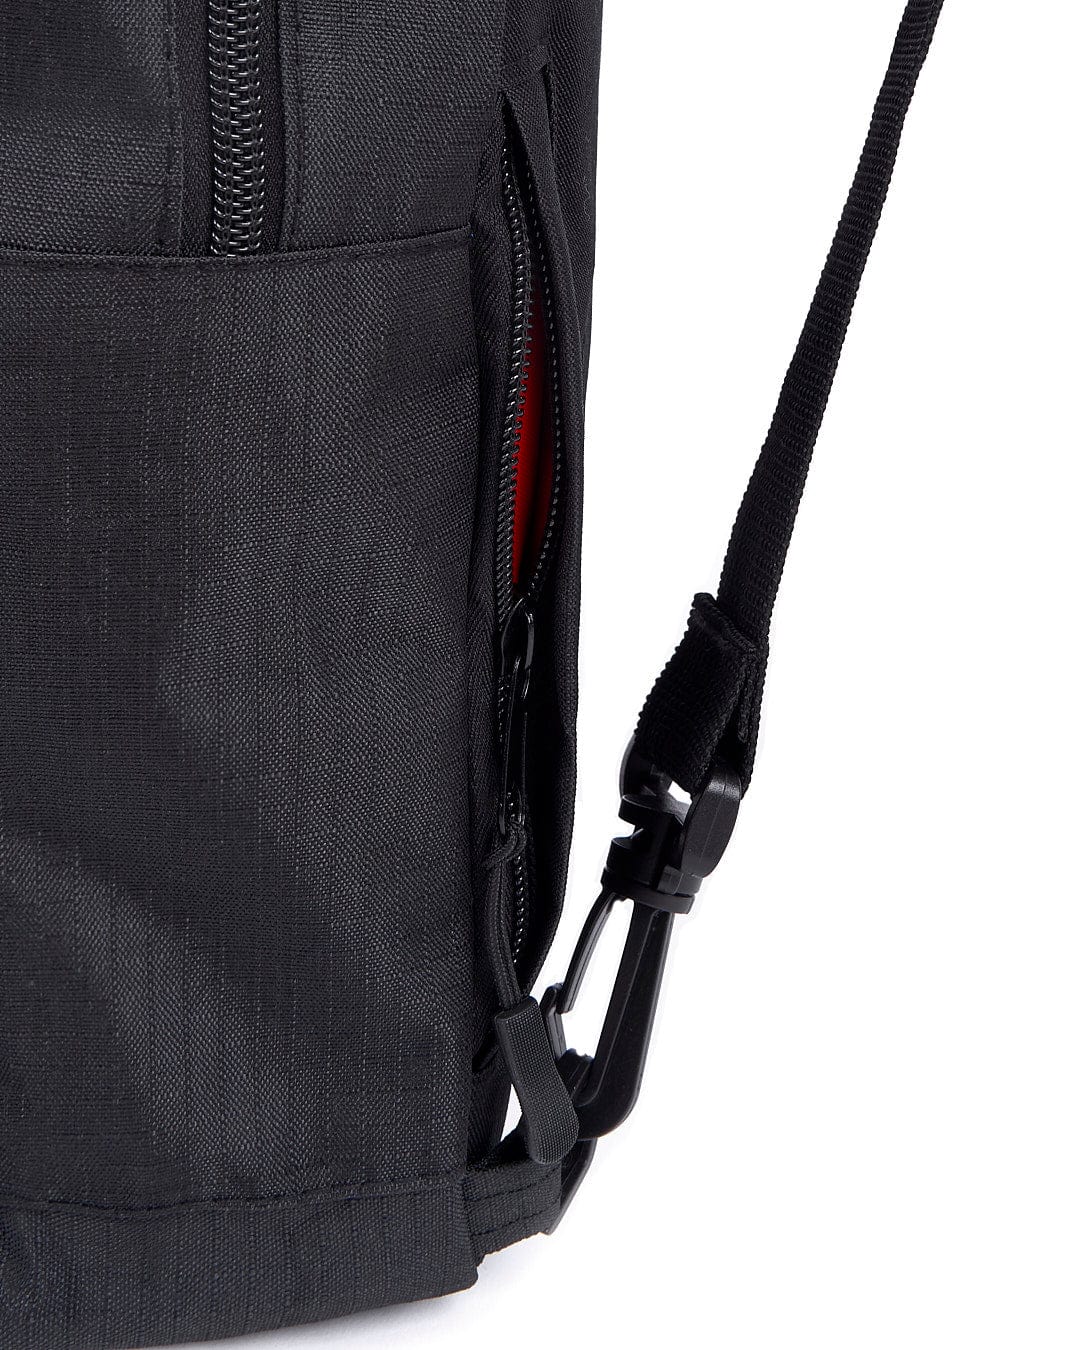 A Coda - Cross-Body Bag - Black with a red zipper from Saltrock.